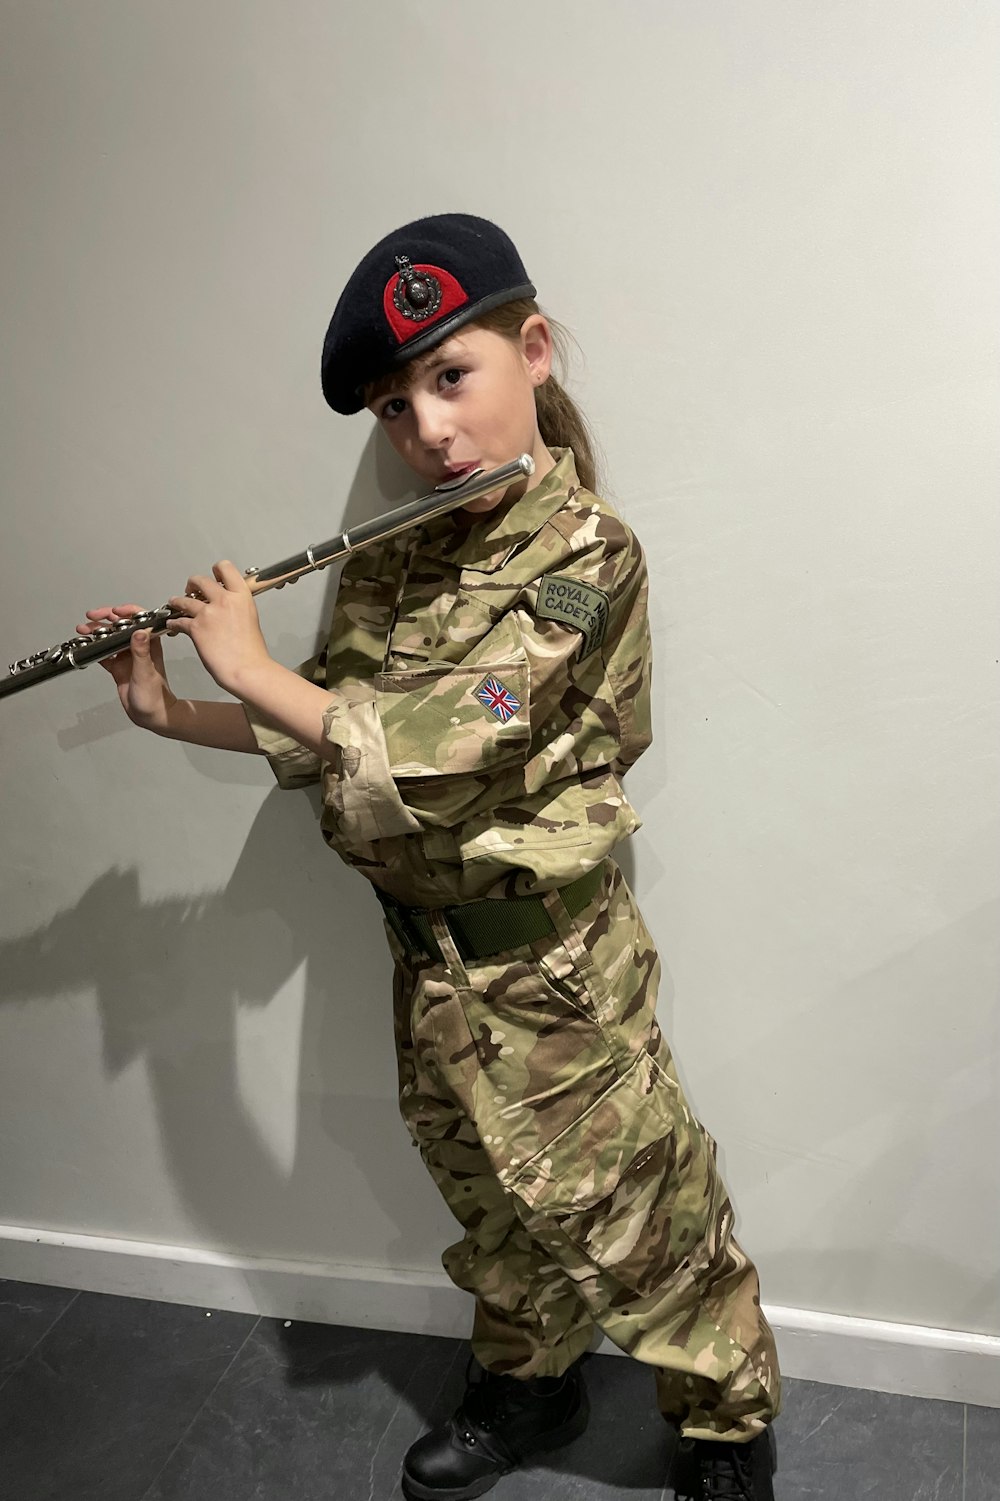 a person in military uniform holding a gun